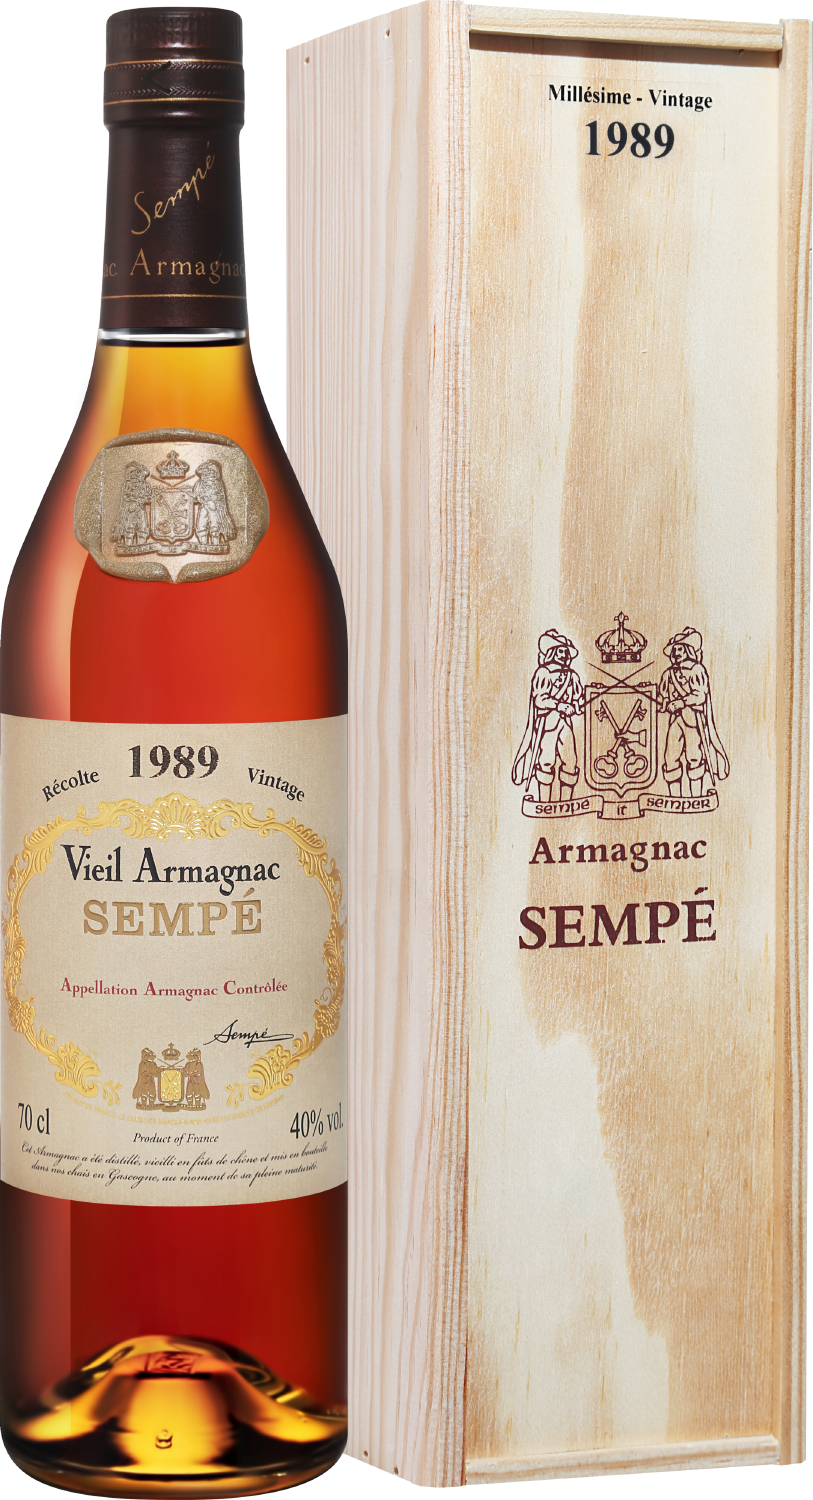 Sempe Vieil Vintage 1989 Armagnac AOC (gift box) sempe vieil armagnac 1989 gift box